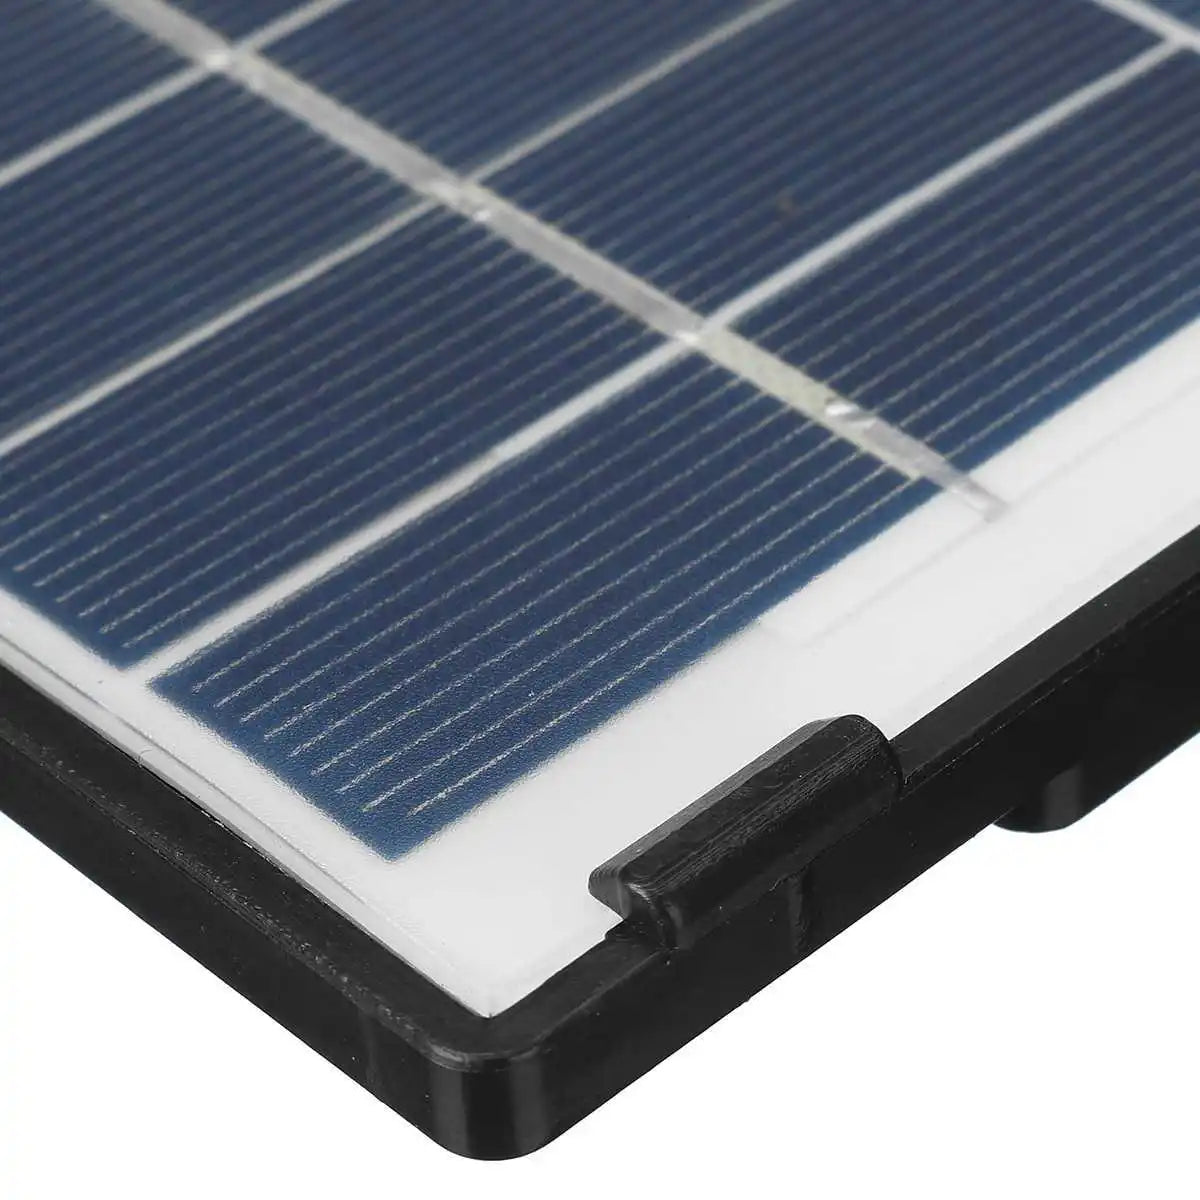 30W Portable Solar Panel, Measurement error: ±1-2cm due to manual measurement, with slight deviations possible.